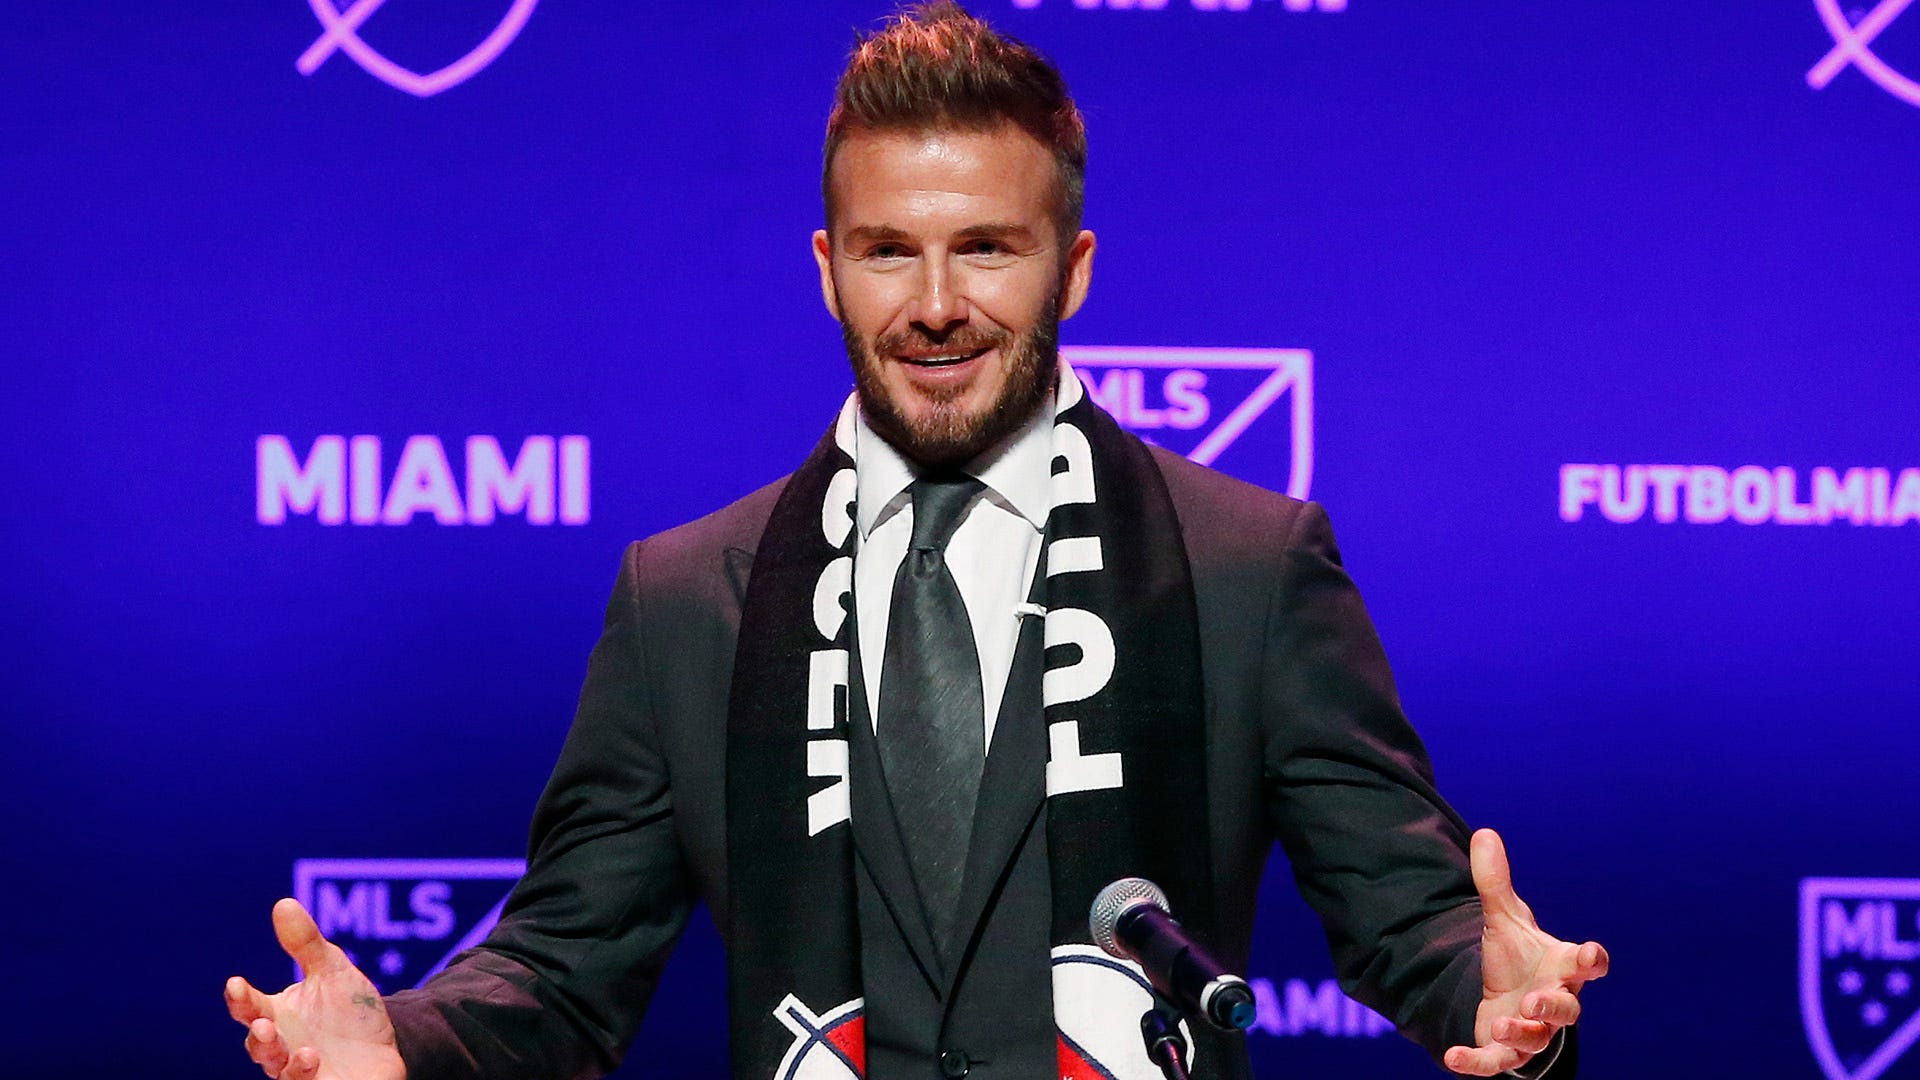 Spoluvlastník Interu Miami David Beckham